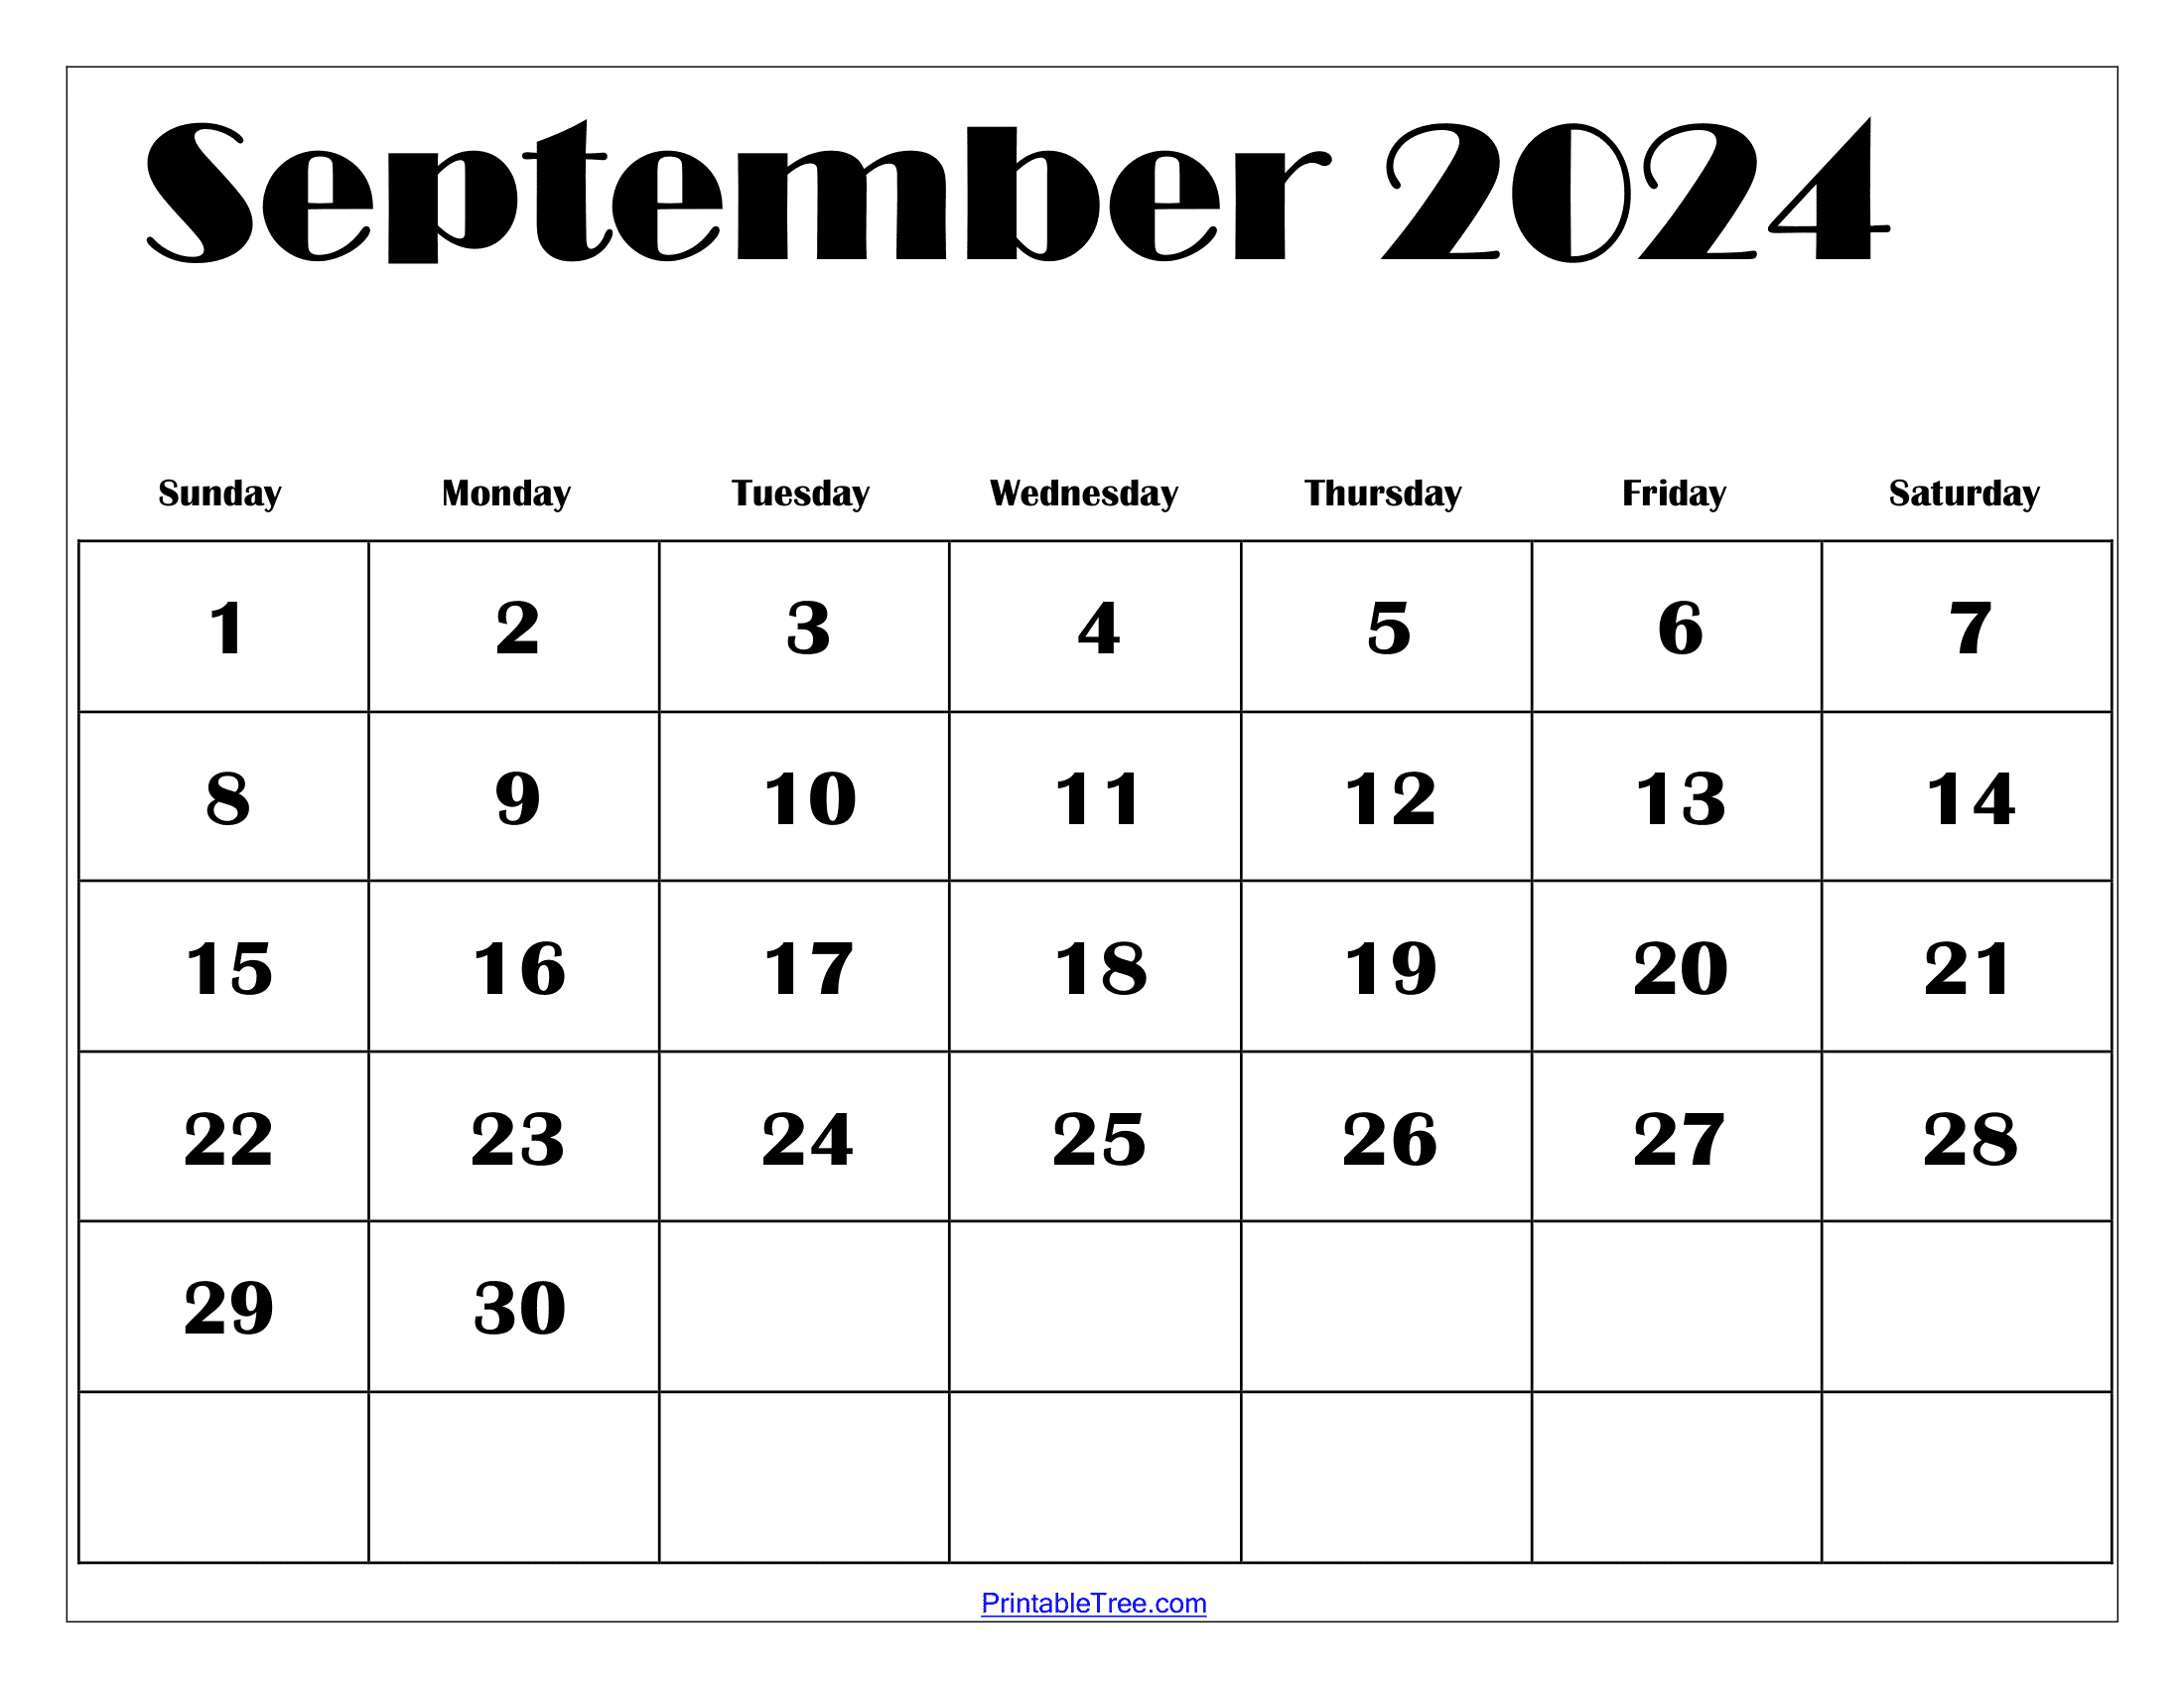 September 2024 Calendar Printable Pdf With Holidays within Free Printable Blank Sept 2024 Calendar